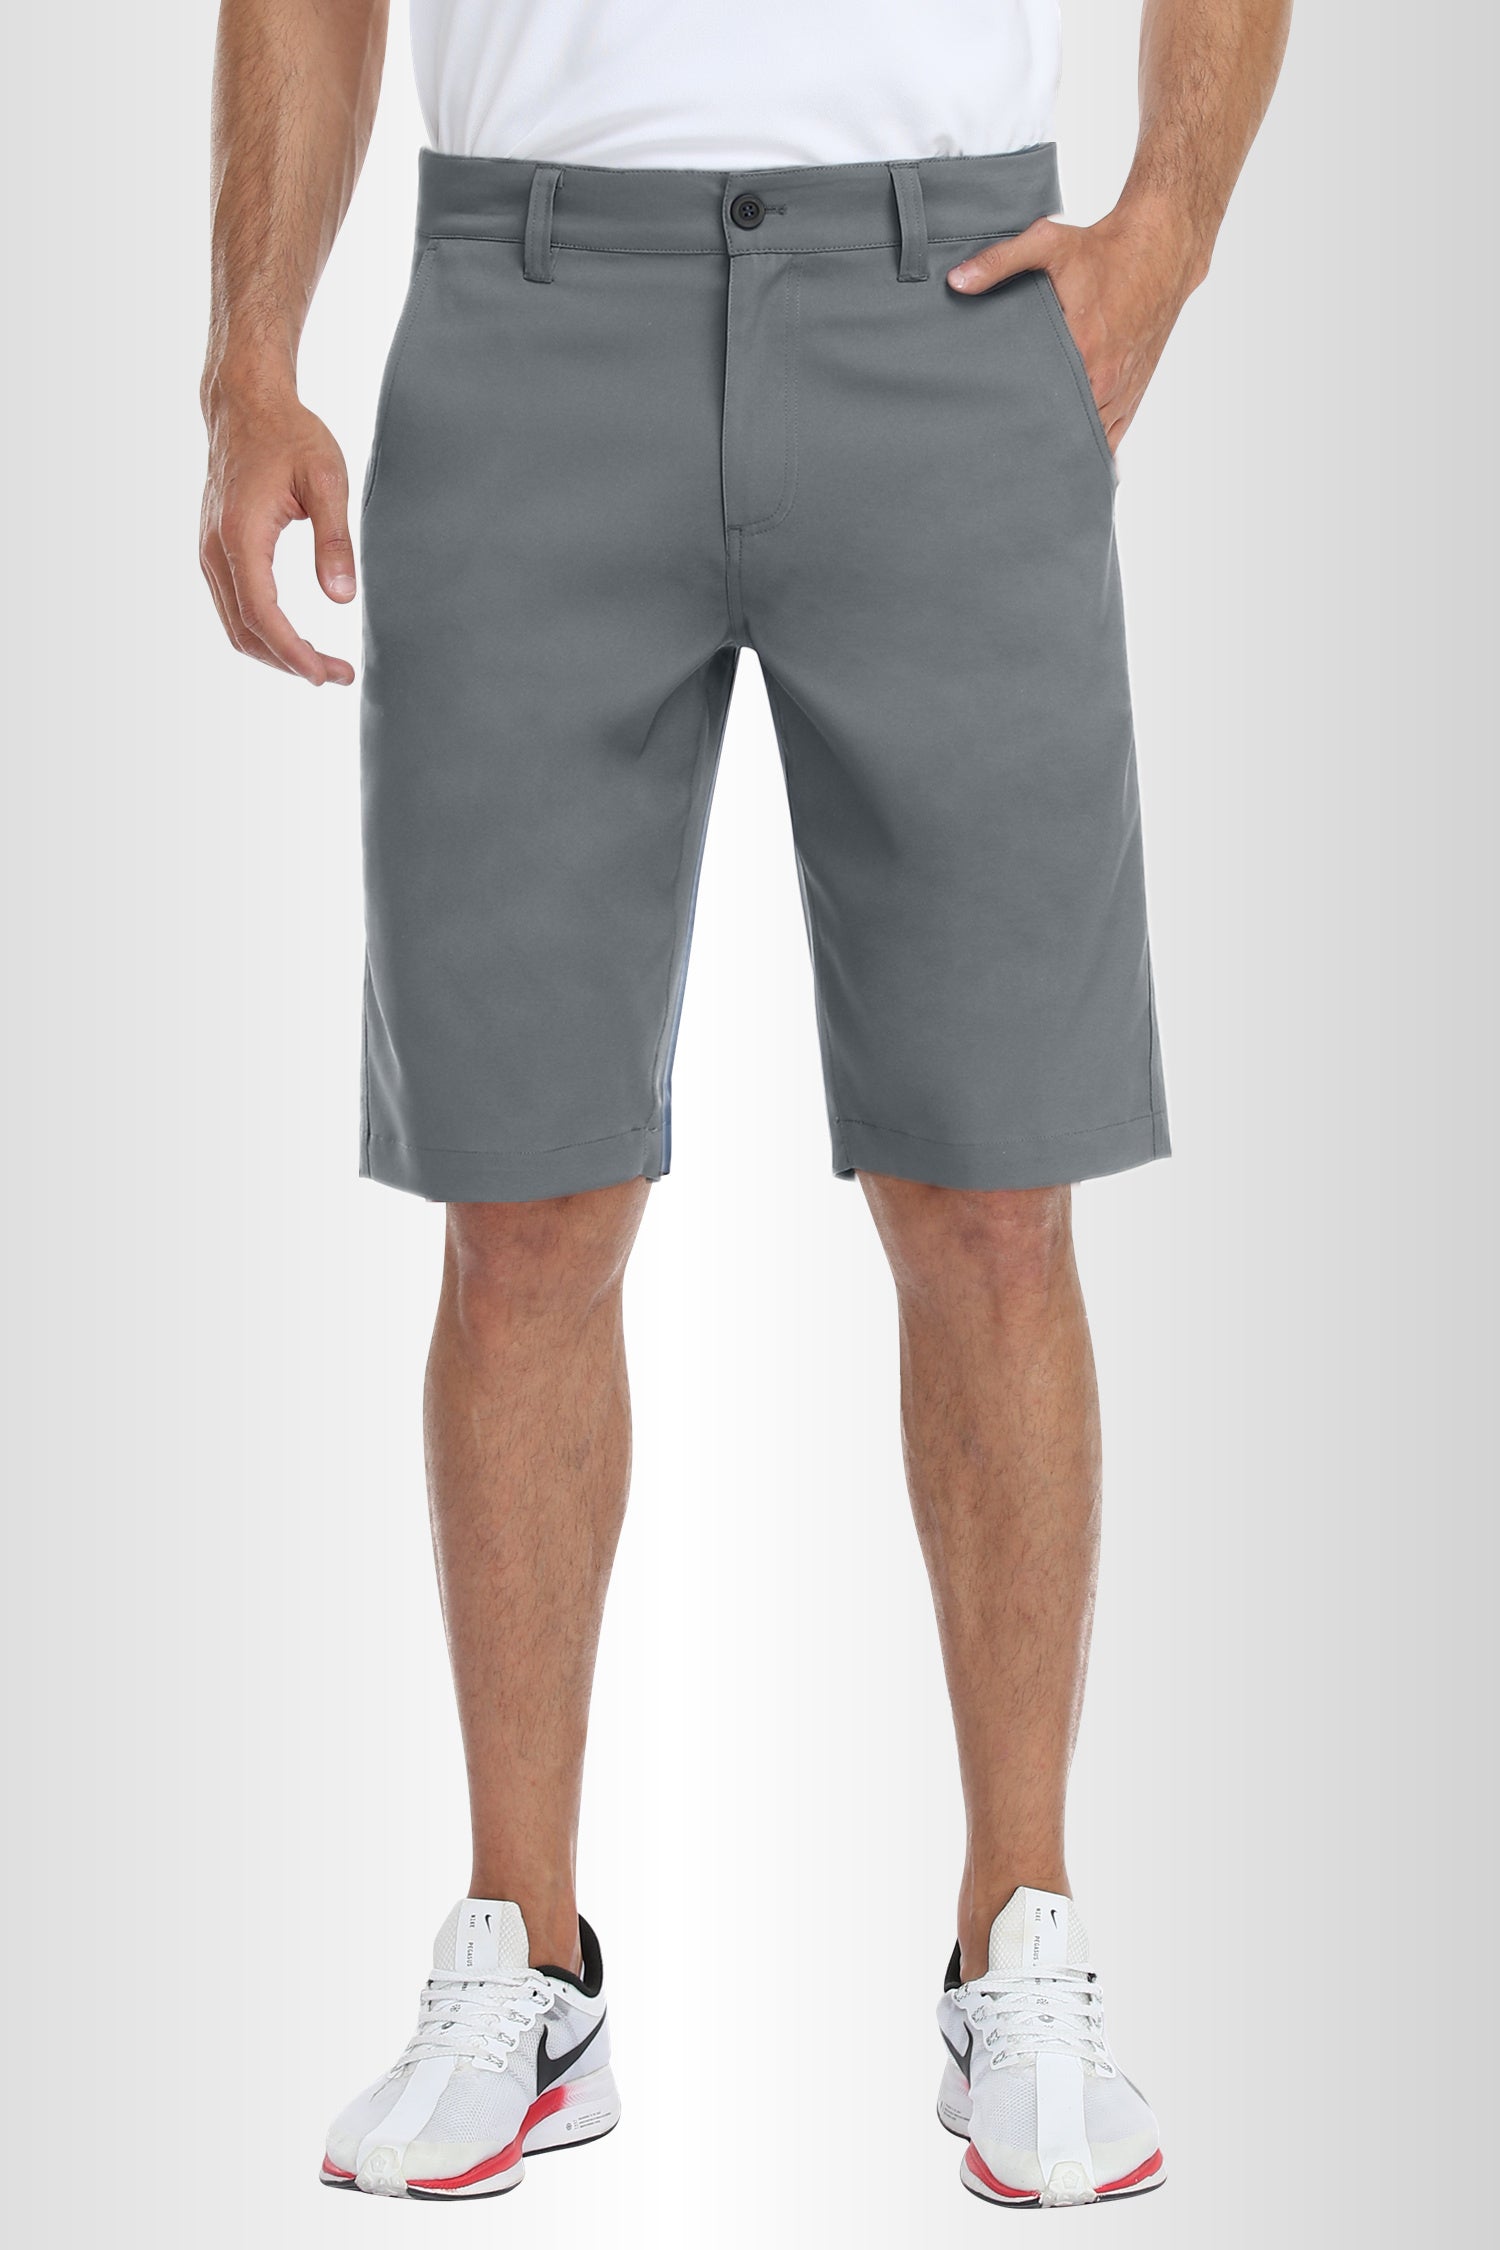 PULI Men Dress Golf Hybrid Shorts Hiking Lightweight Quick Dry 10